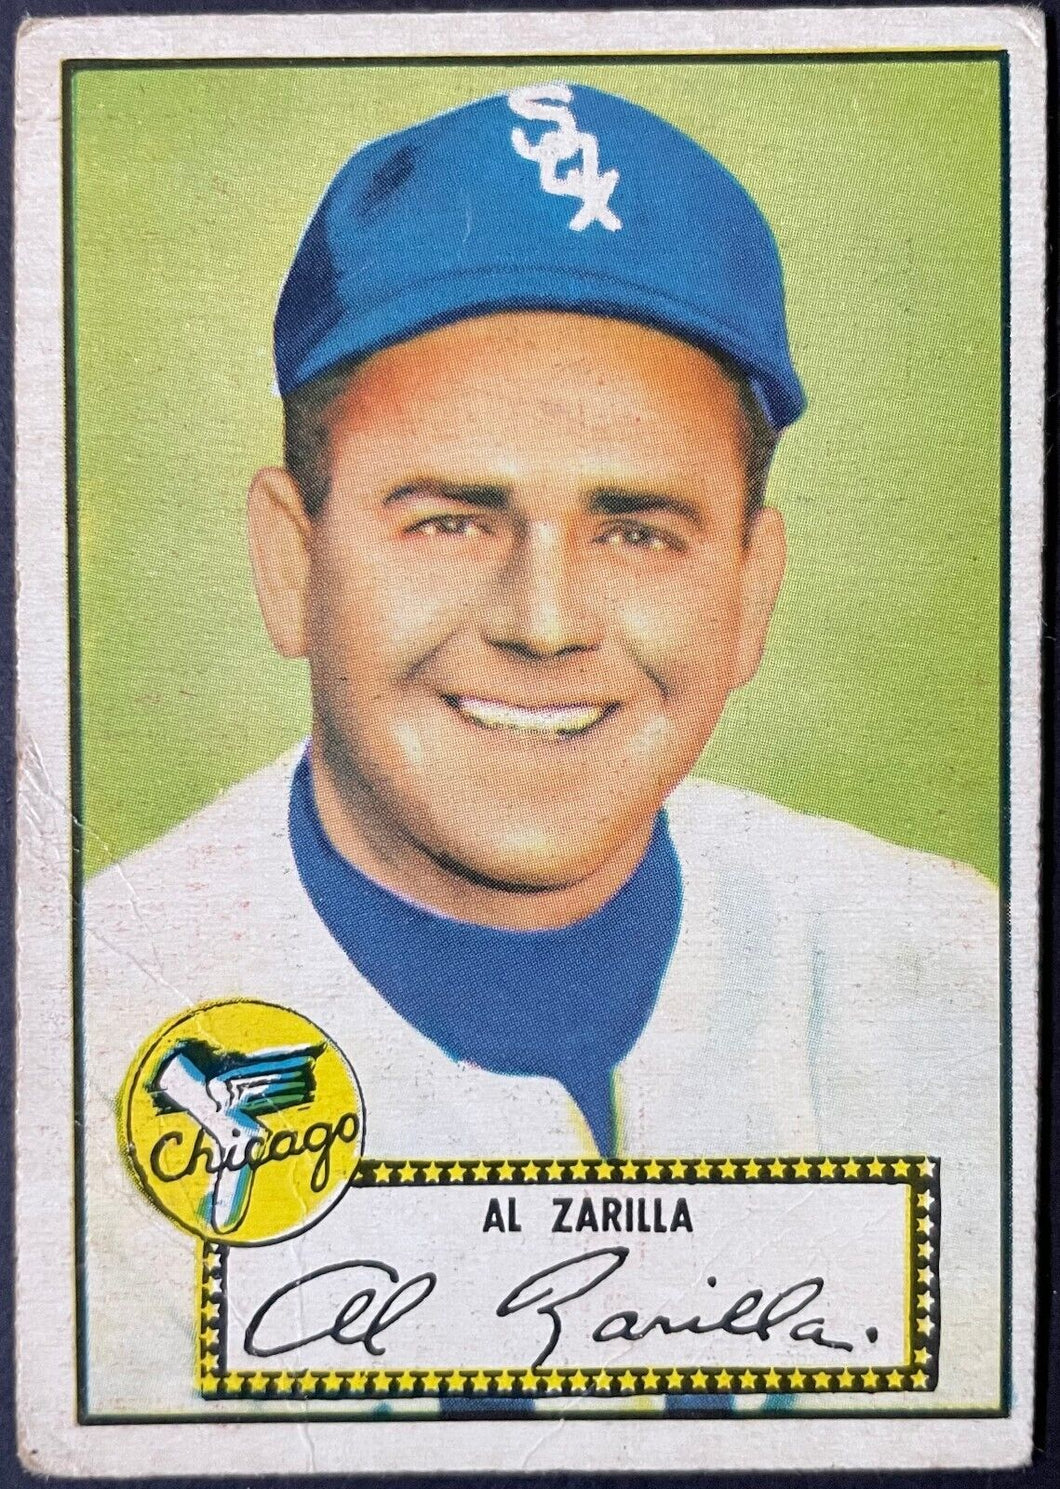 1952 Topps Baseball Al Zarilla #70 Chicago White Sox MLB Card Vintage